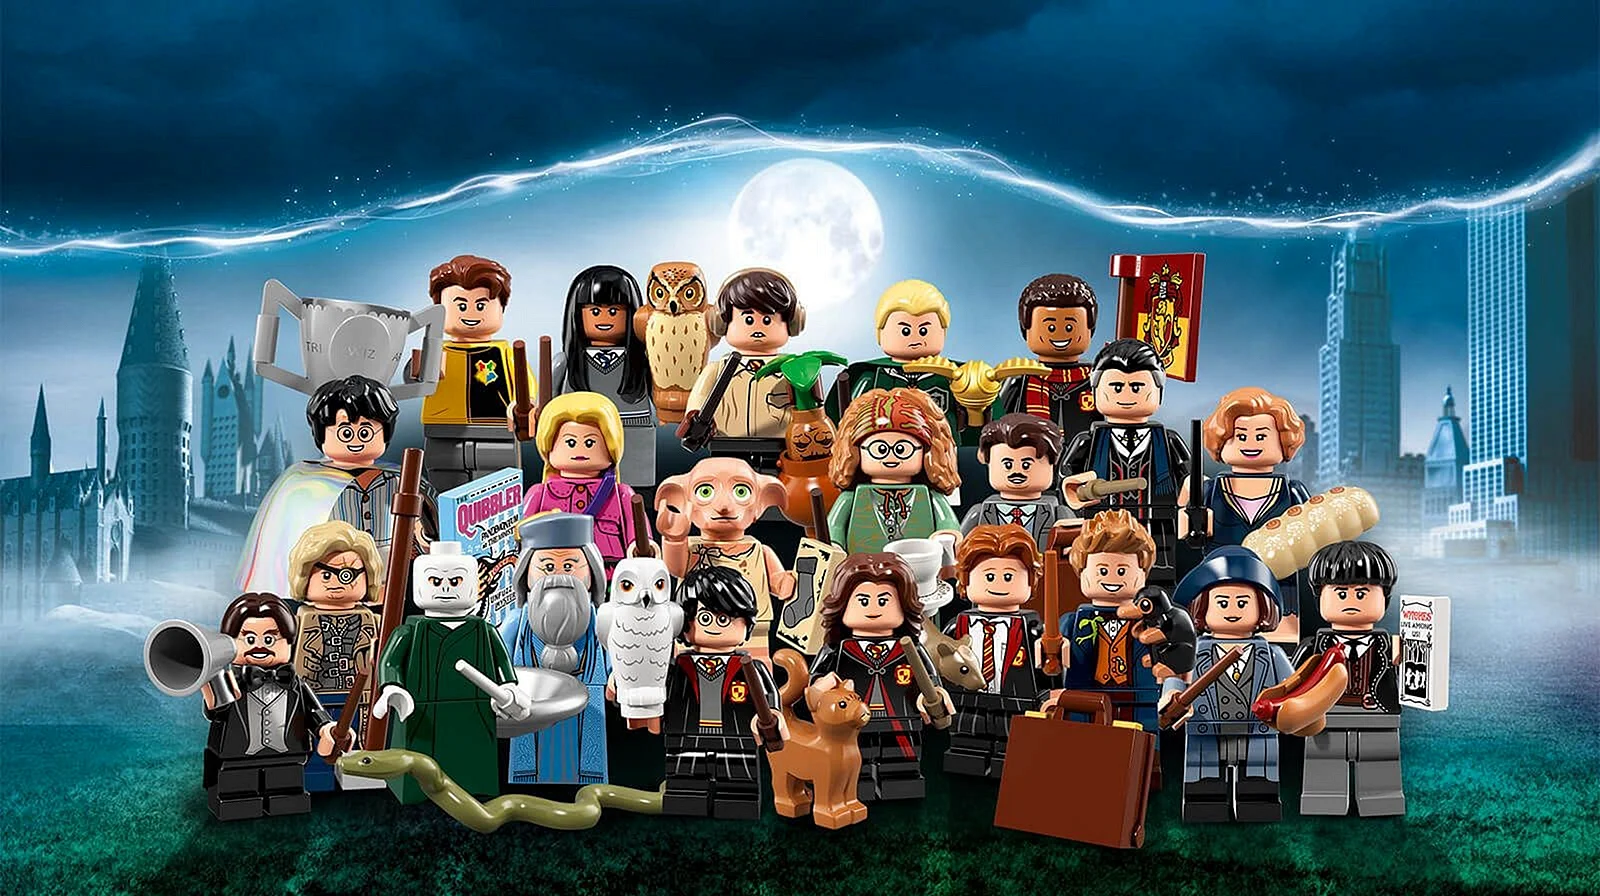 Lego 71022 Minifigures Harry Potter Fantastic Beasts 2018 Wallpaper